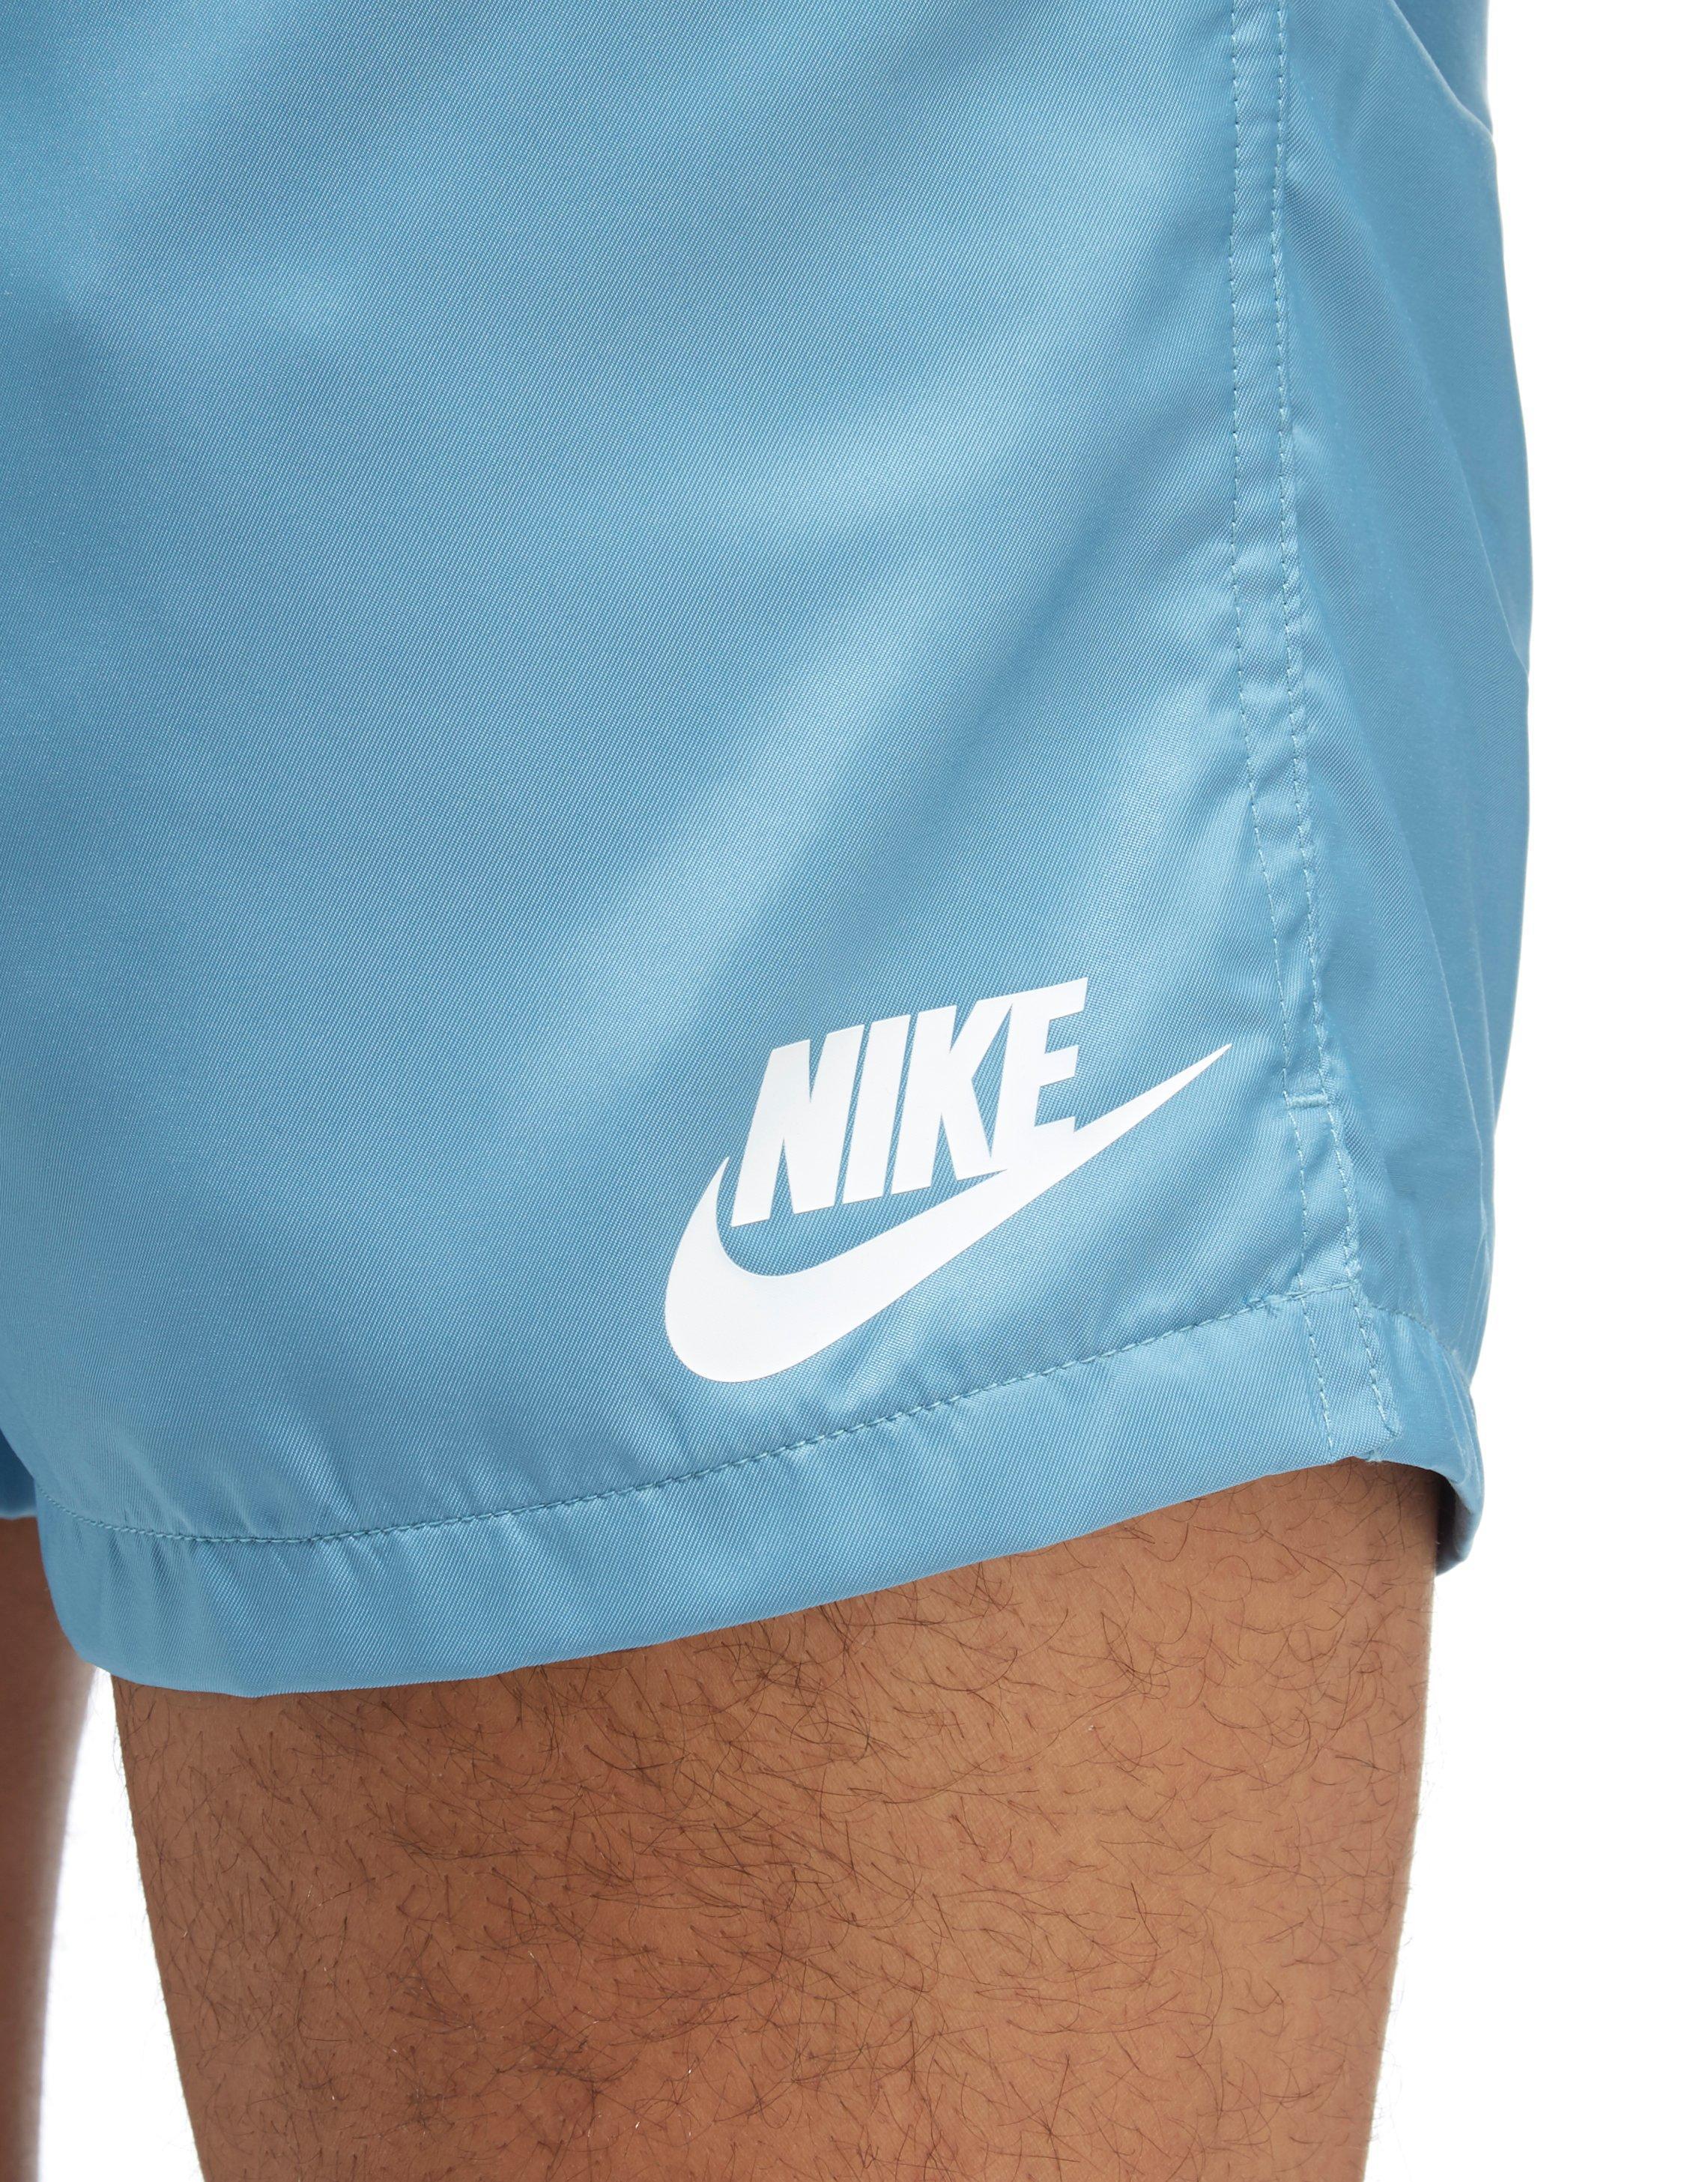 Lyst - Nike Flow Swim Shorts in Blue for Men